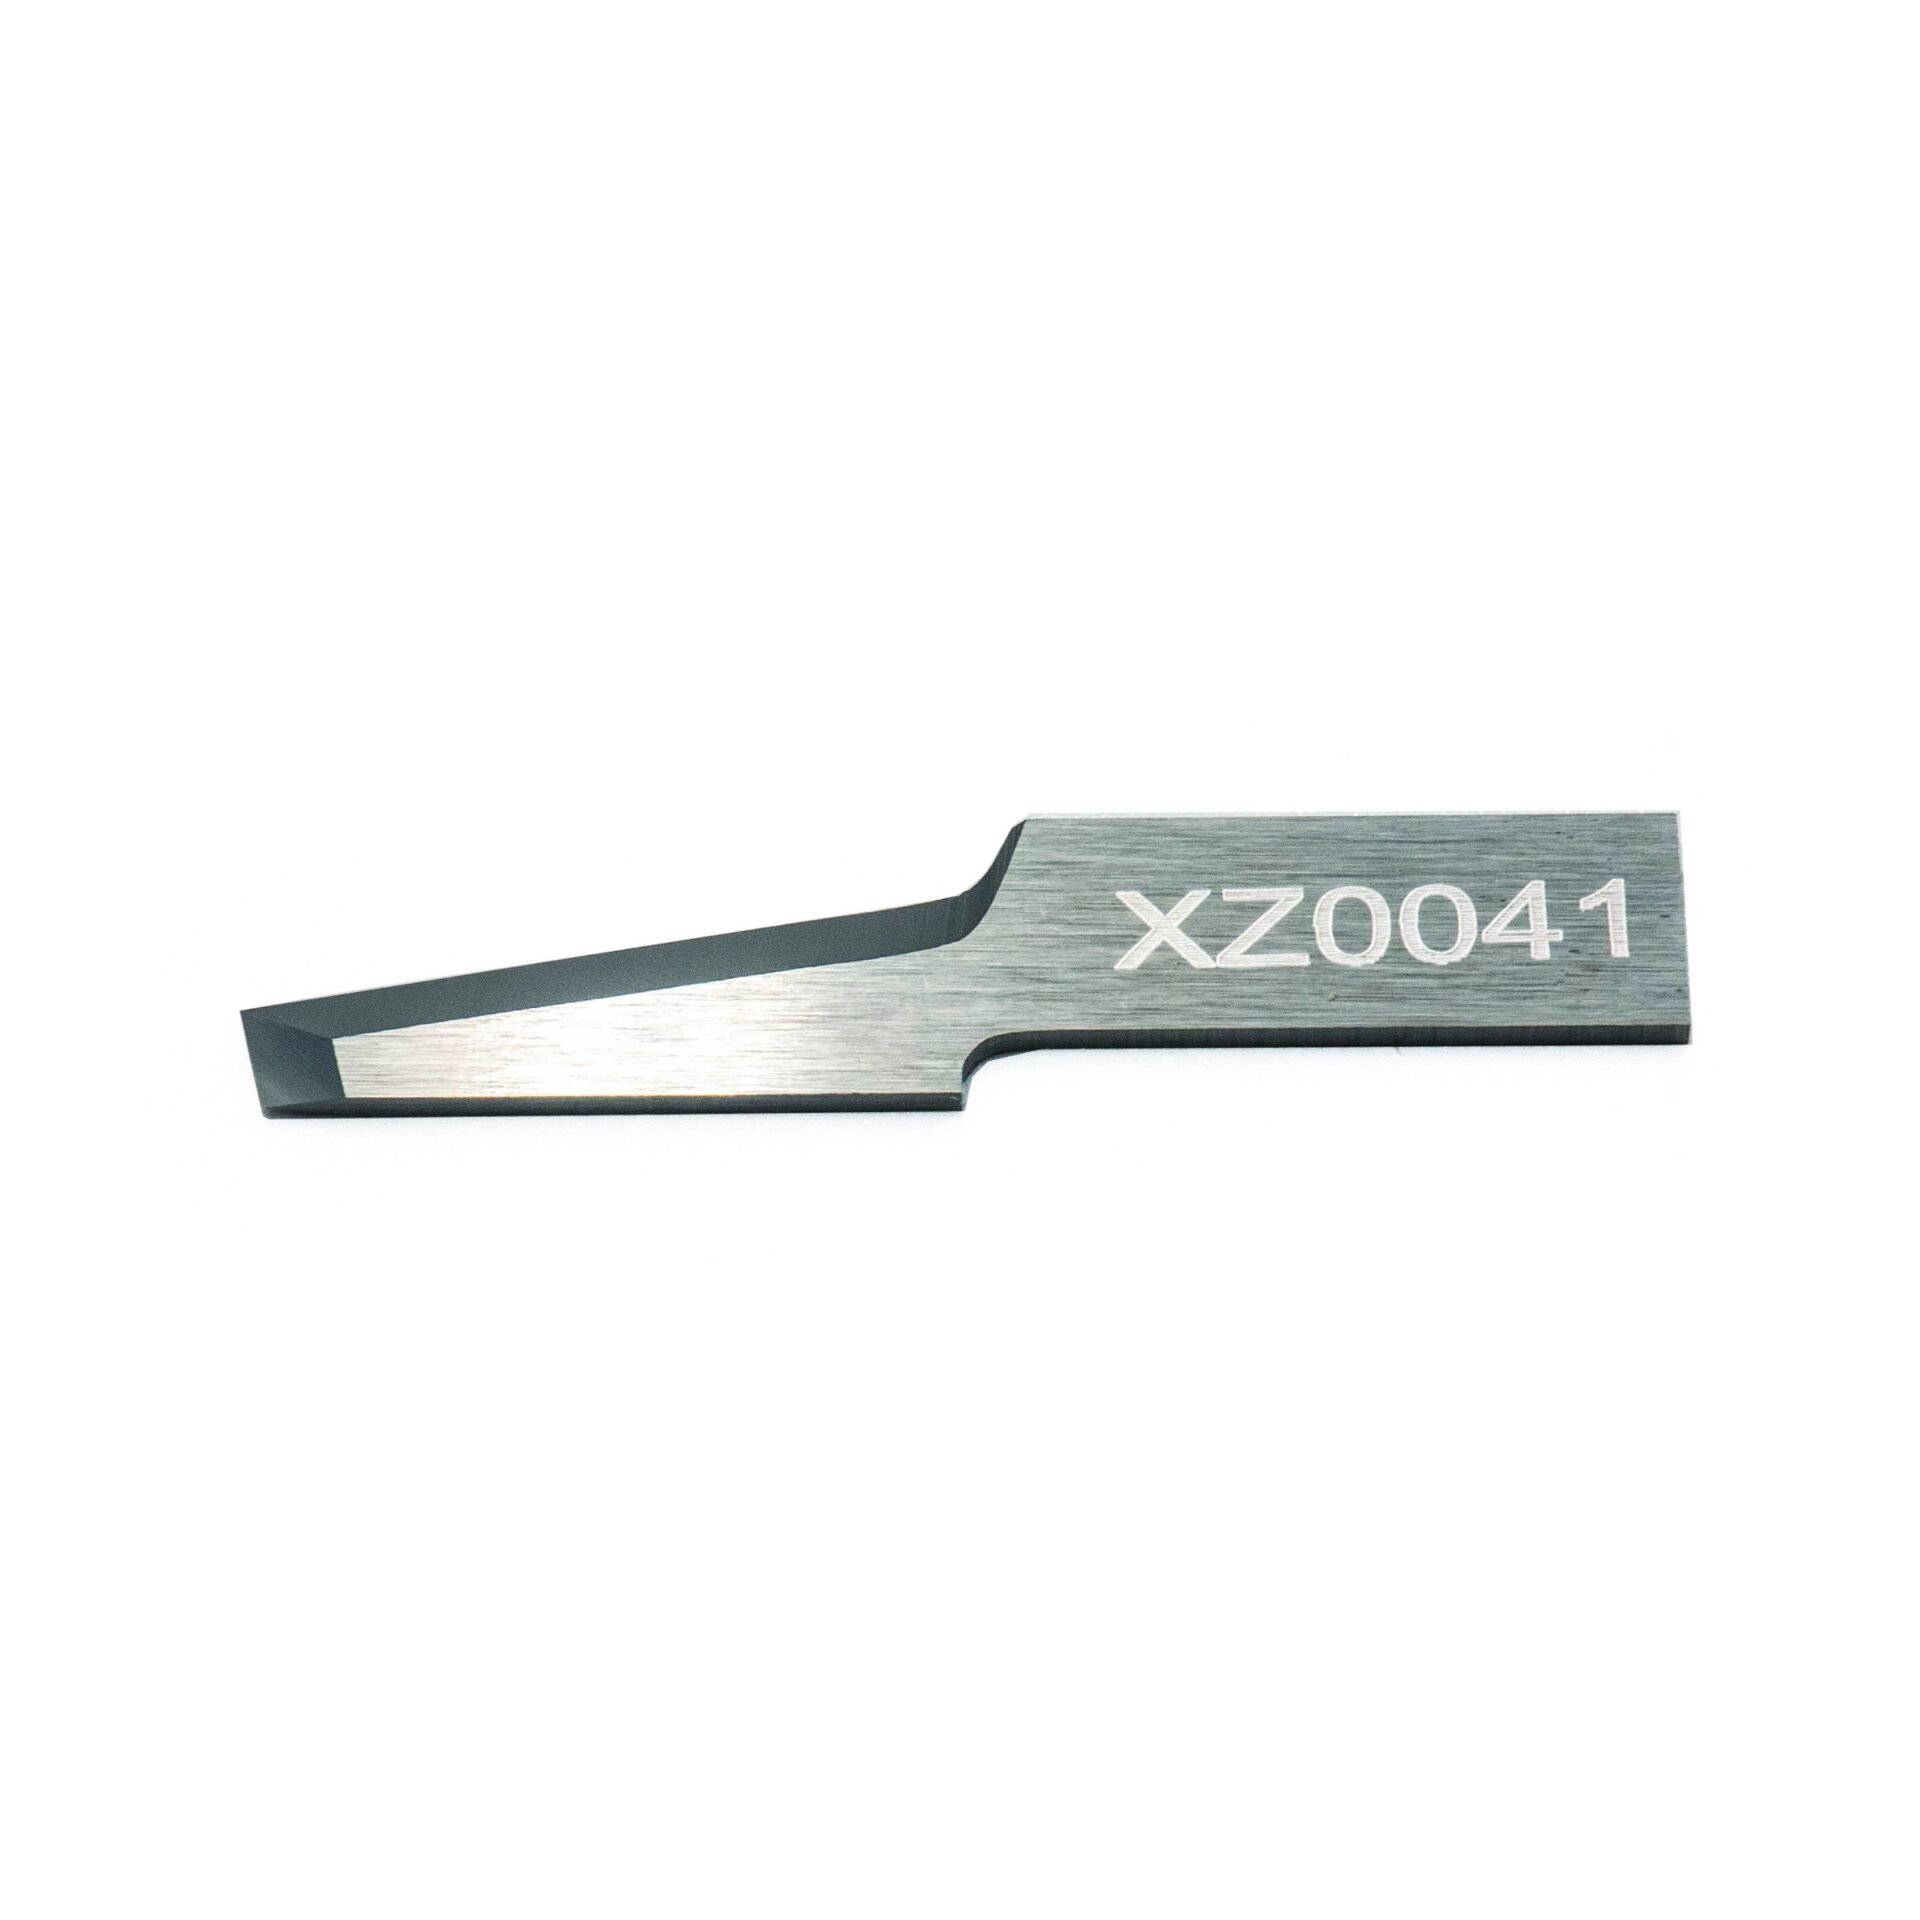 XZ0041 - Cutter Shop Limited